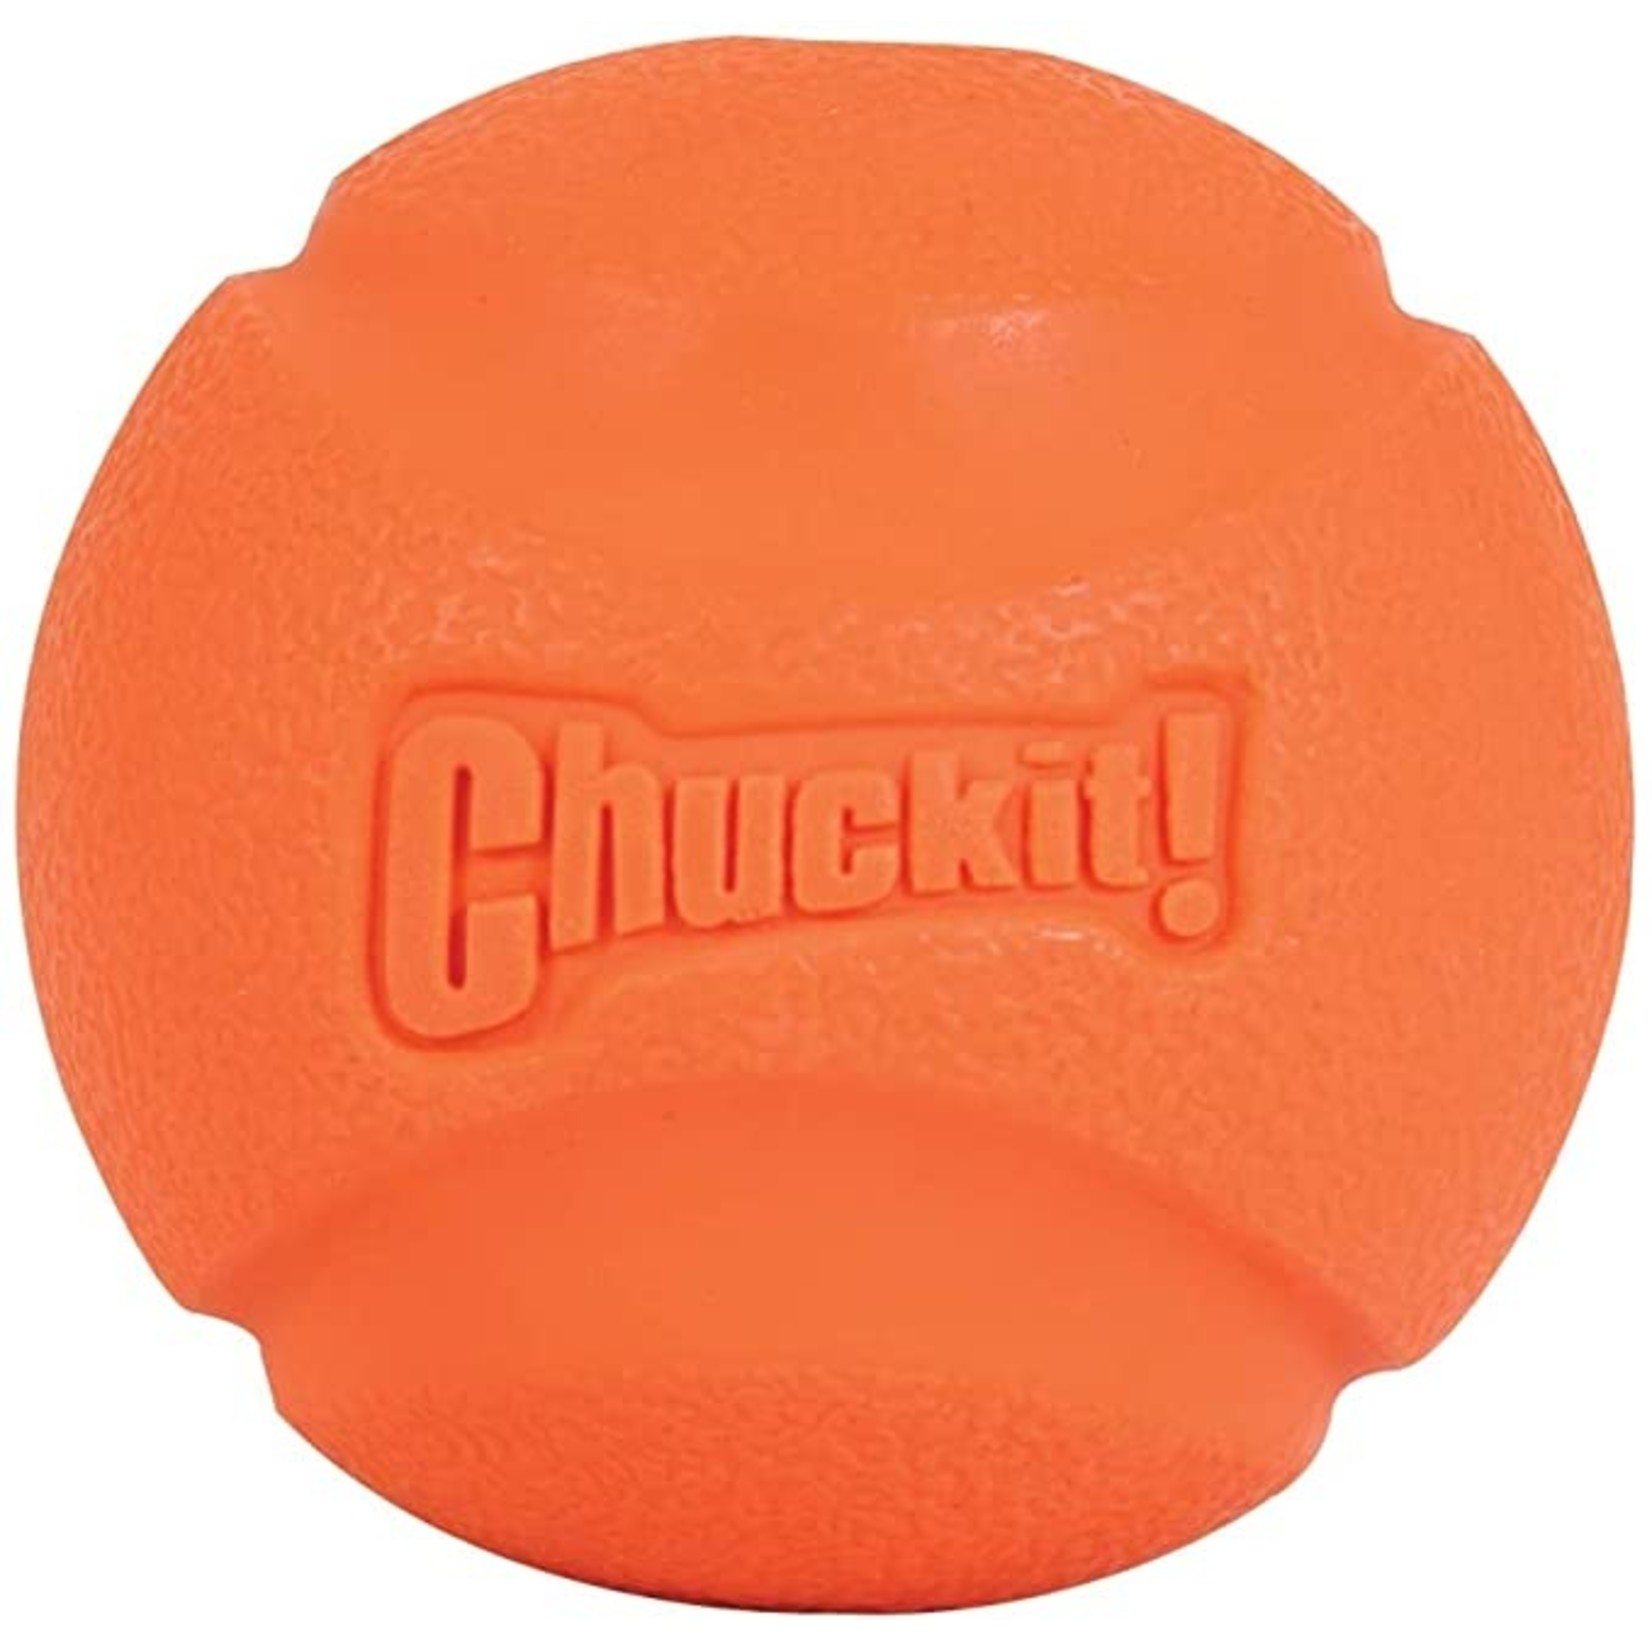 Chuck it Chuck It - Balls